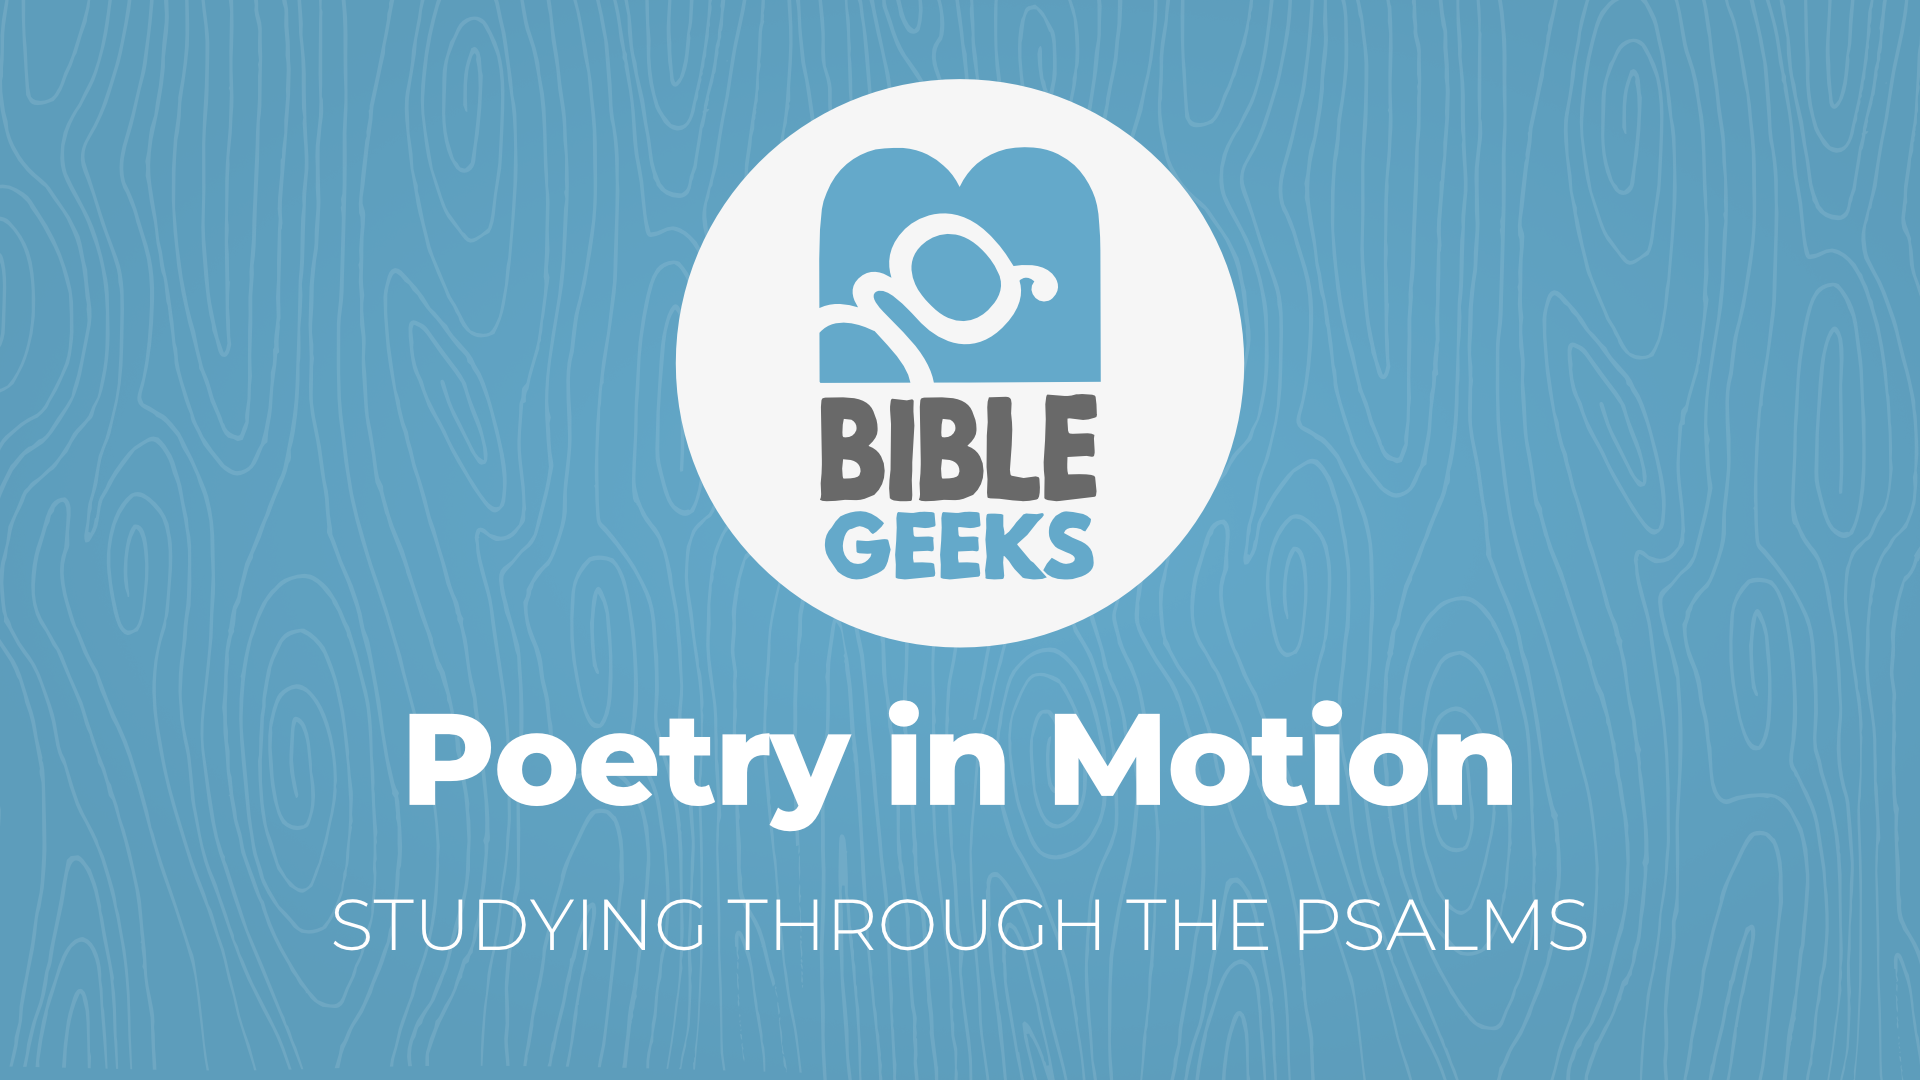 bibleGeeksSeriesPosterTemplate-PoetryInMotion.png